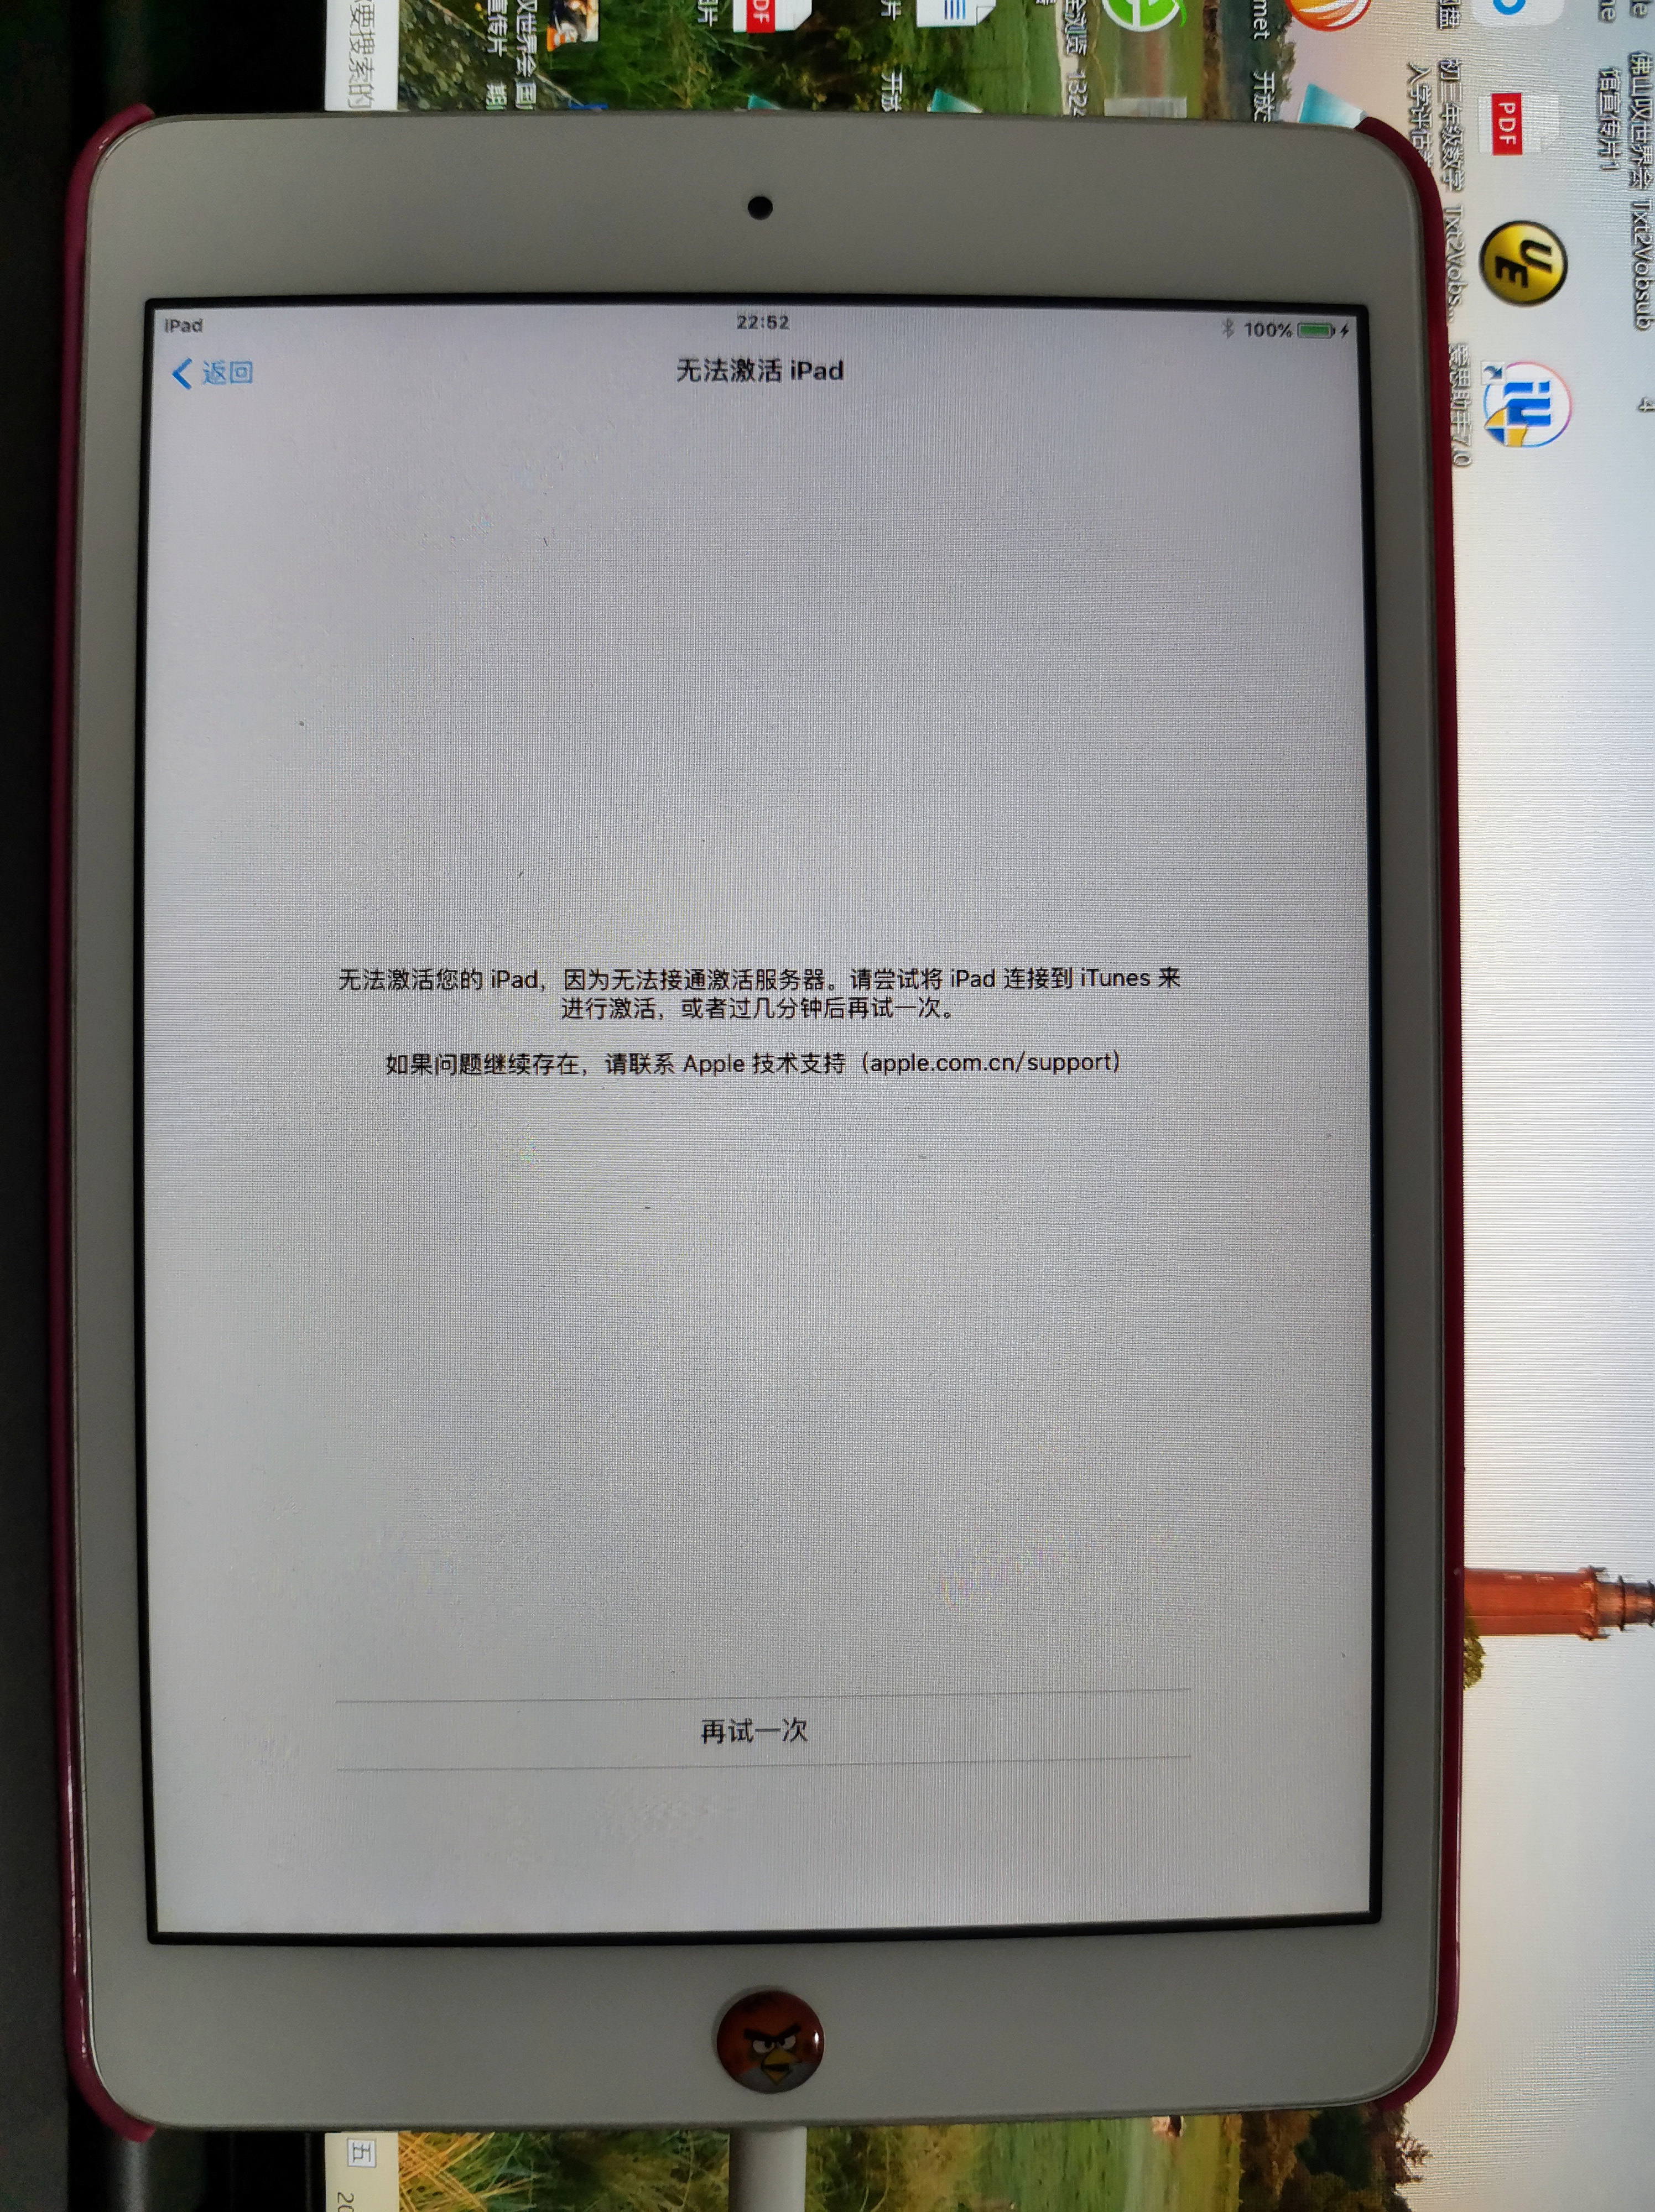 iPad Mini找回密码失败无法激活，就只能变为一块板砖？